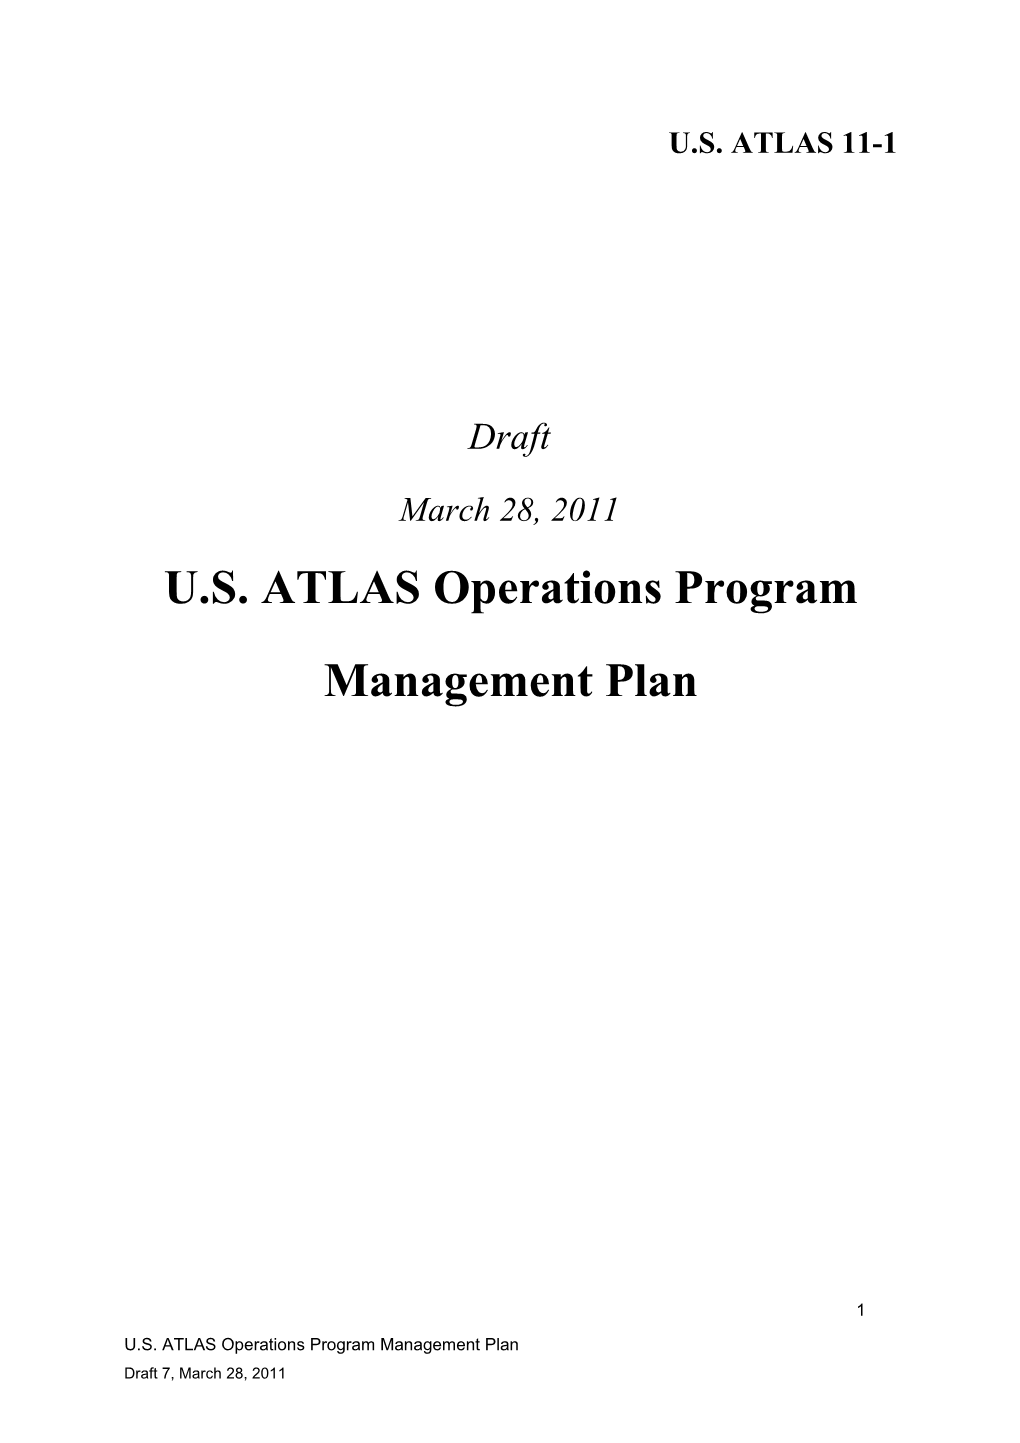 U.S. Atlas Operations Program